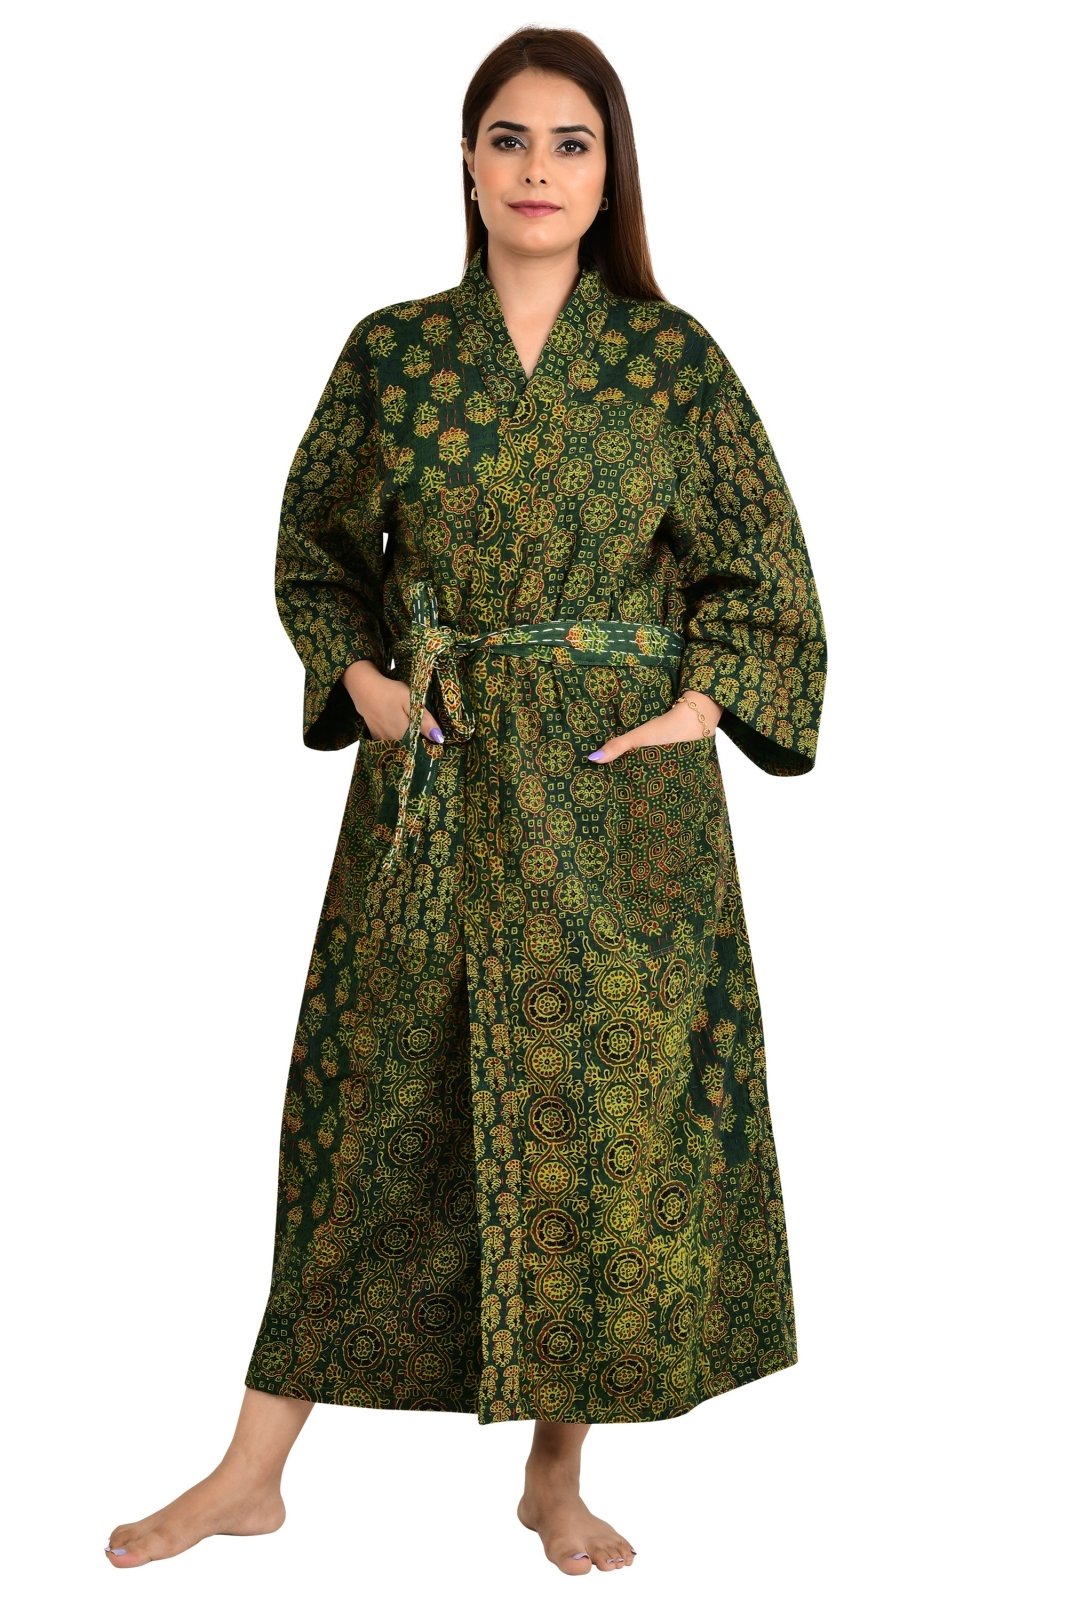 Kantha Stitch 100% Cotton Reversible Long Kimono Women Jacket | Handmade Stitch Robe | Unisex Gift | Red Orange Yellow Ajrakh Print - The Eastern Loom